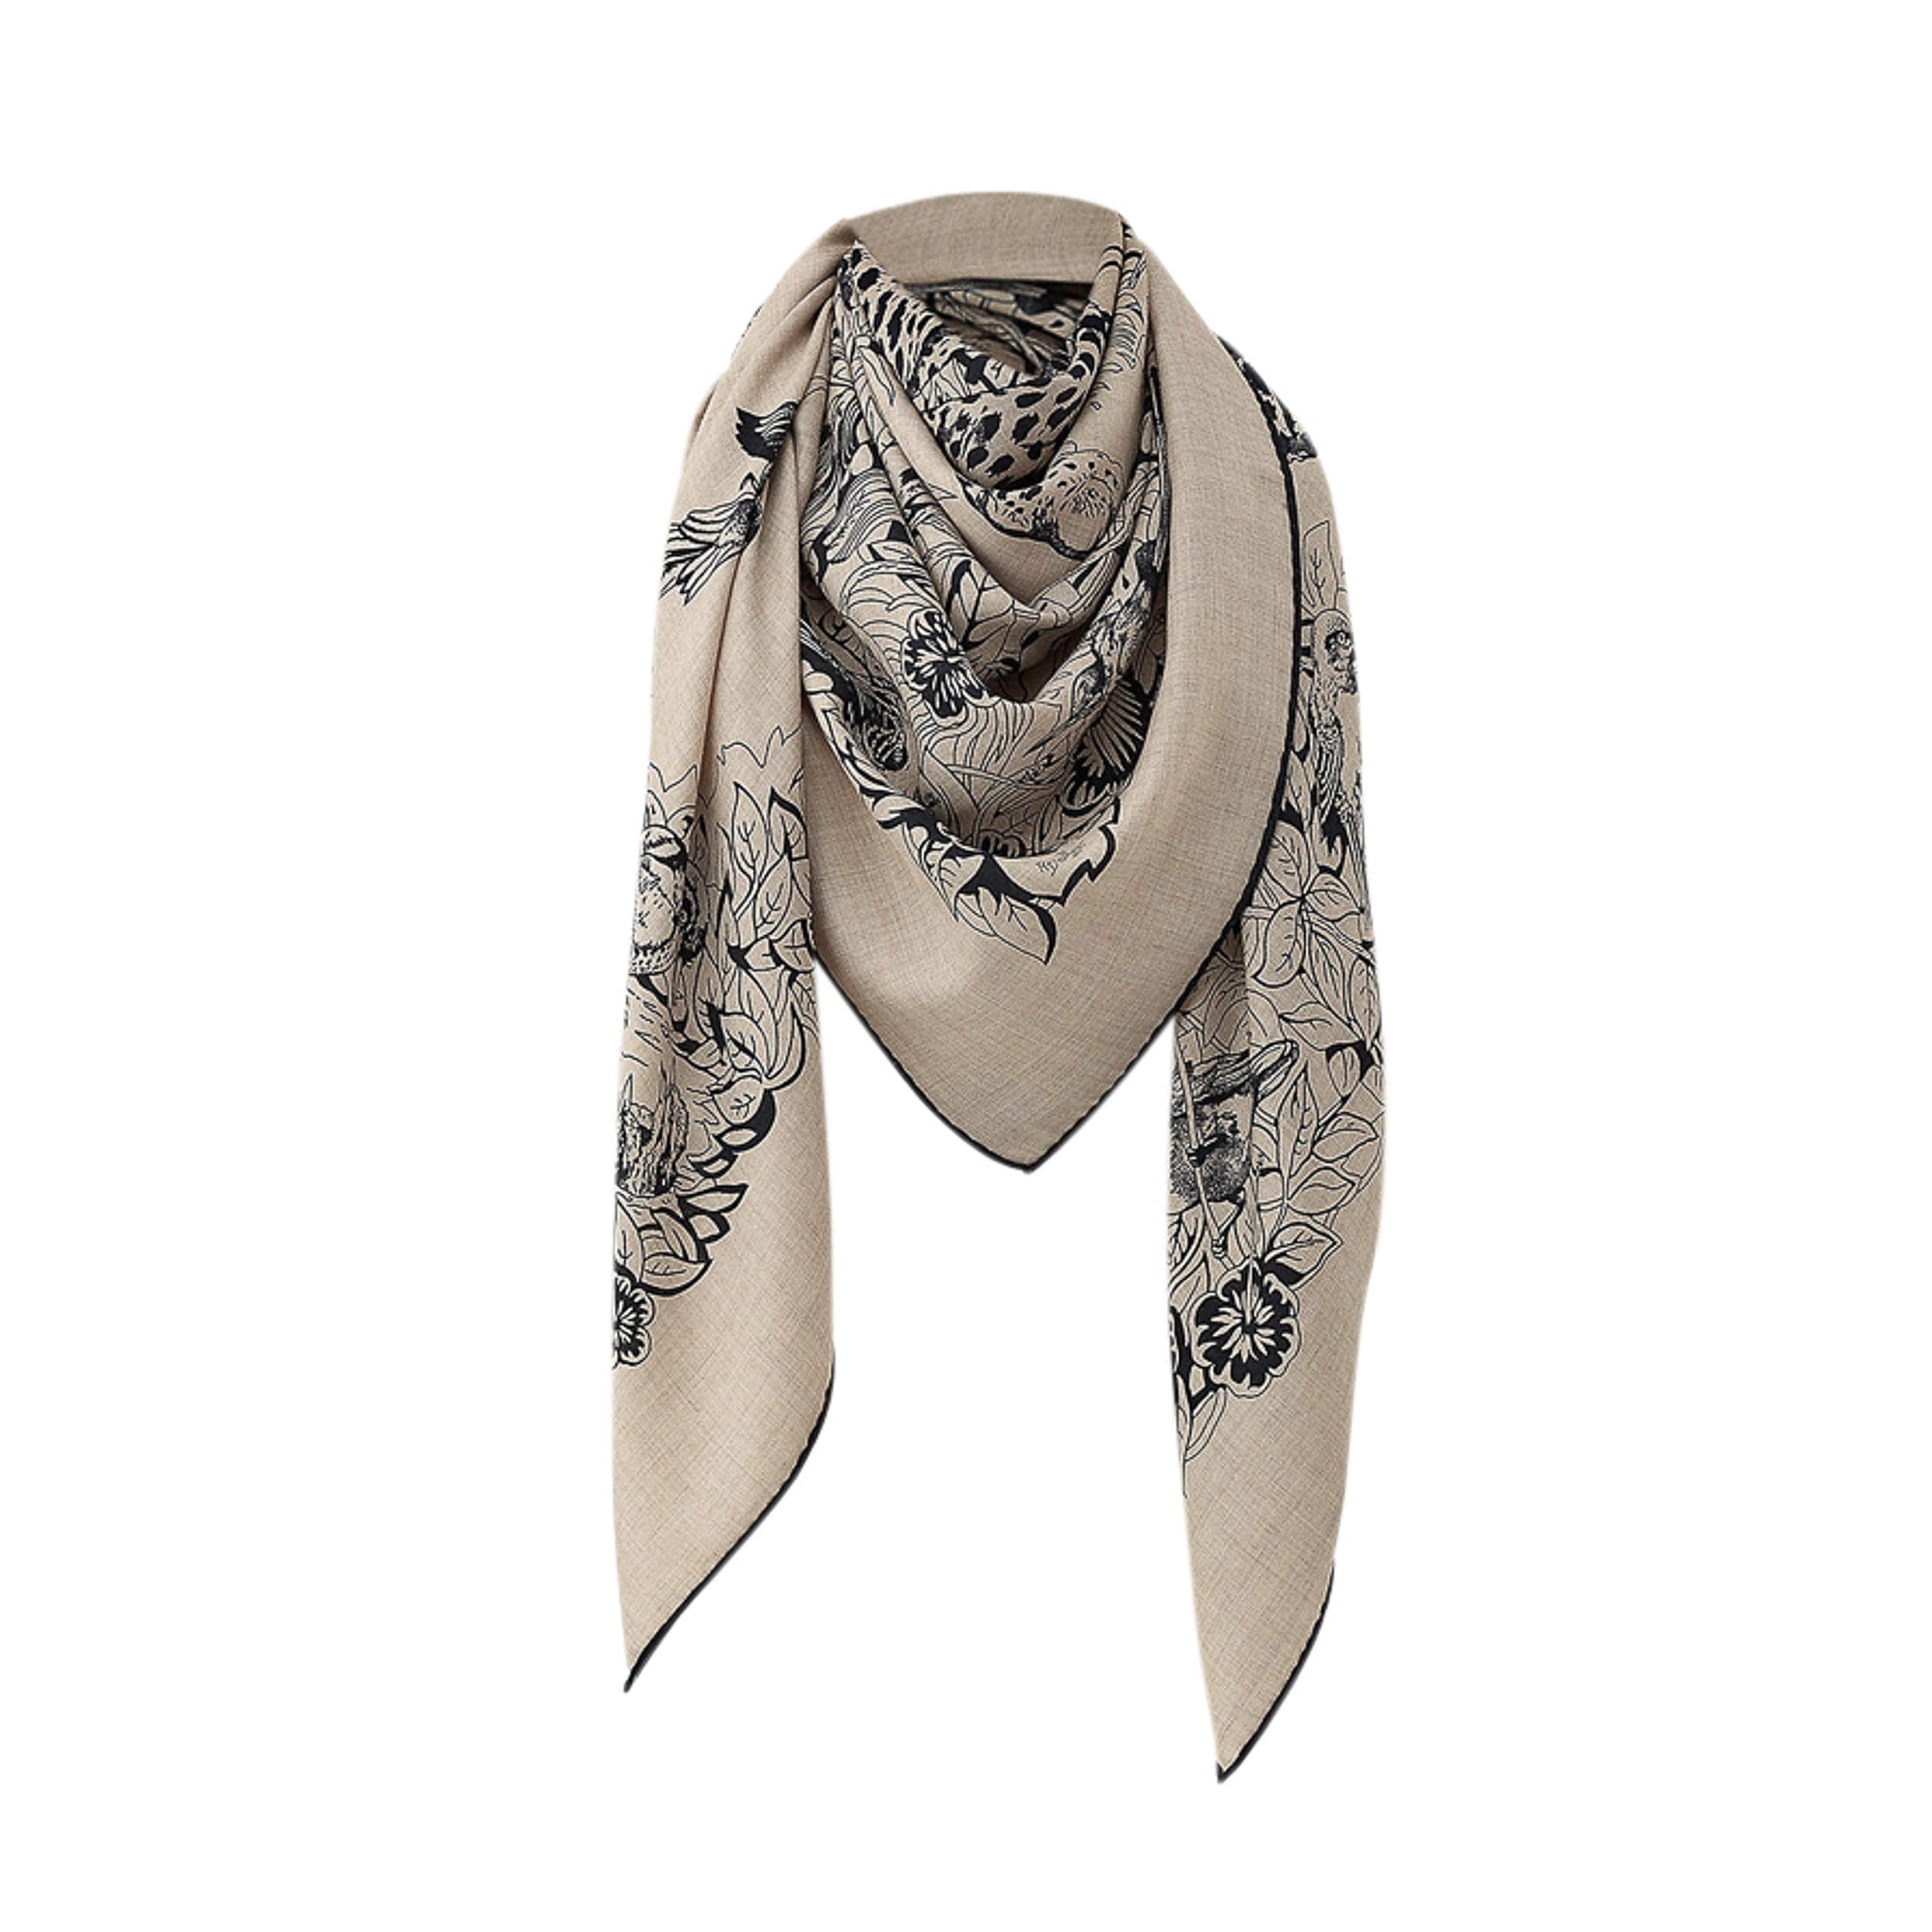 Hermes cashmere silk 54" x 54" shawl Jungle Love scarf